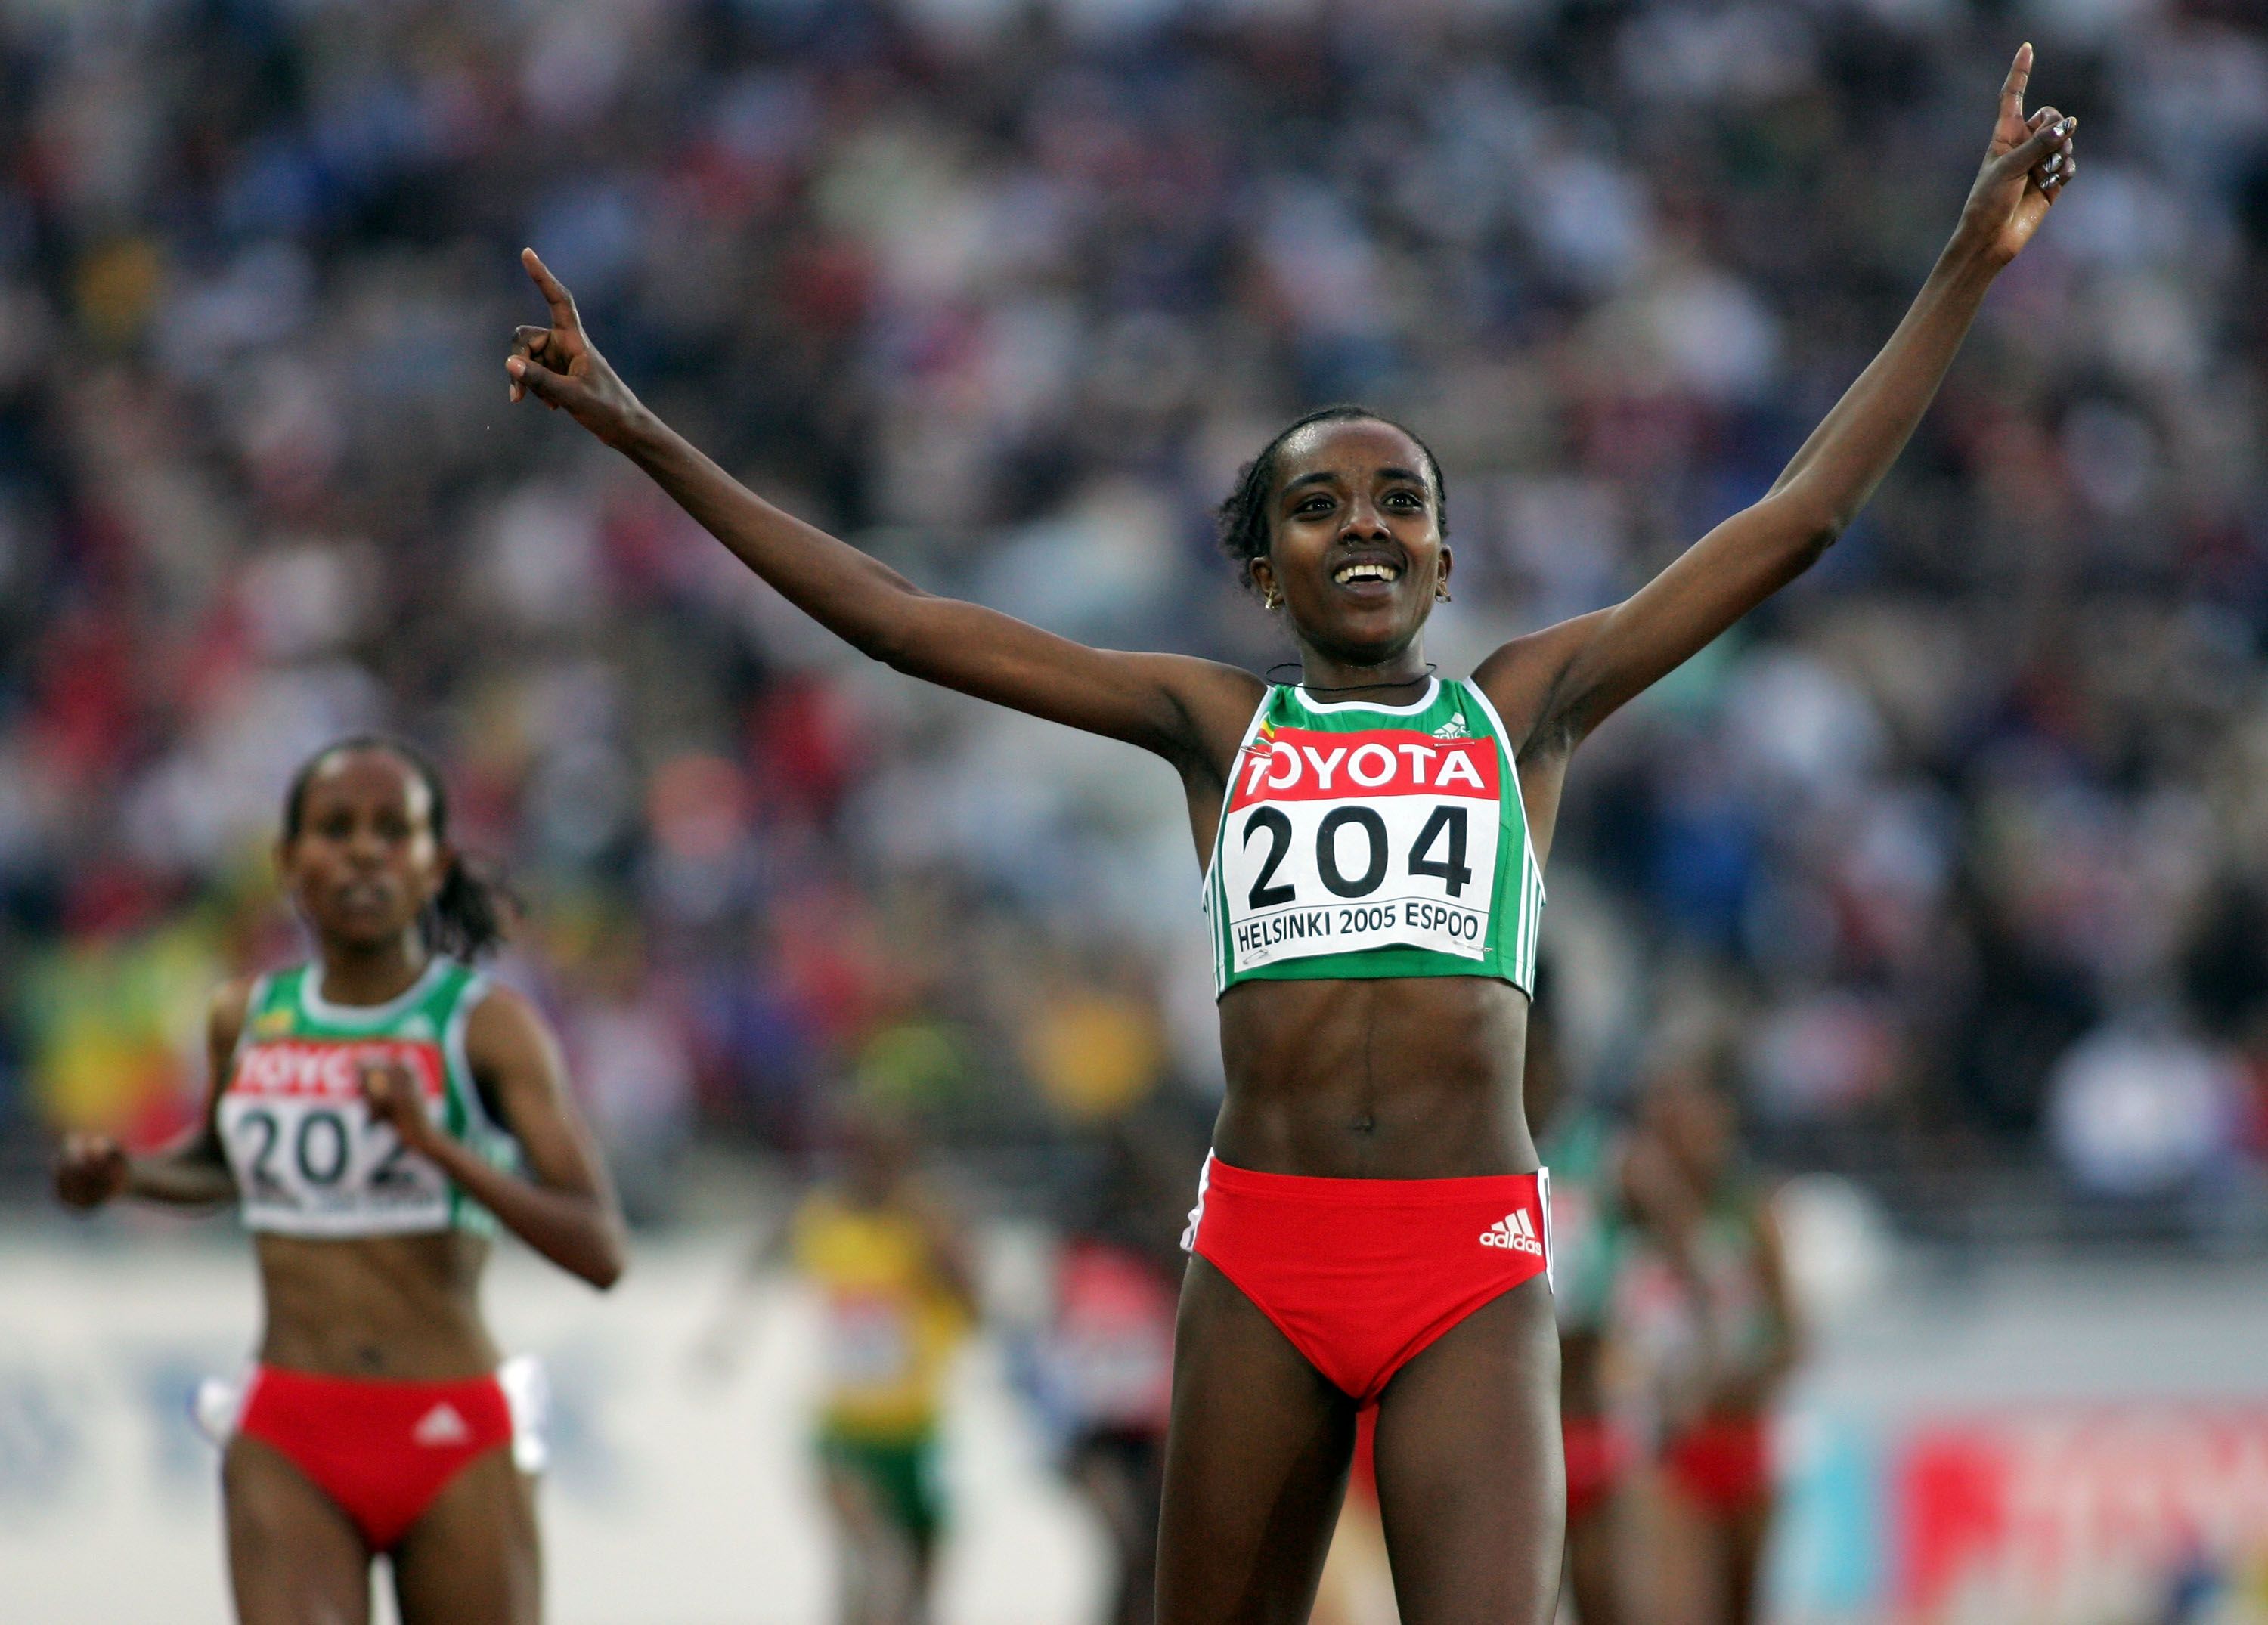 Tirunesh Dibaba wins the 5000m at the World Championships in Helsinki